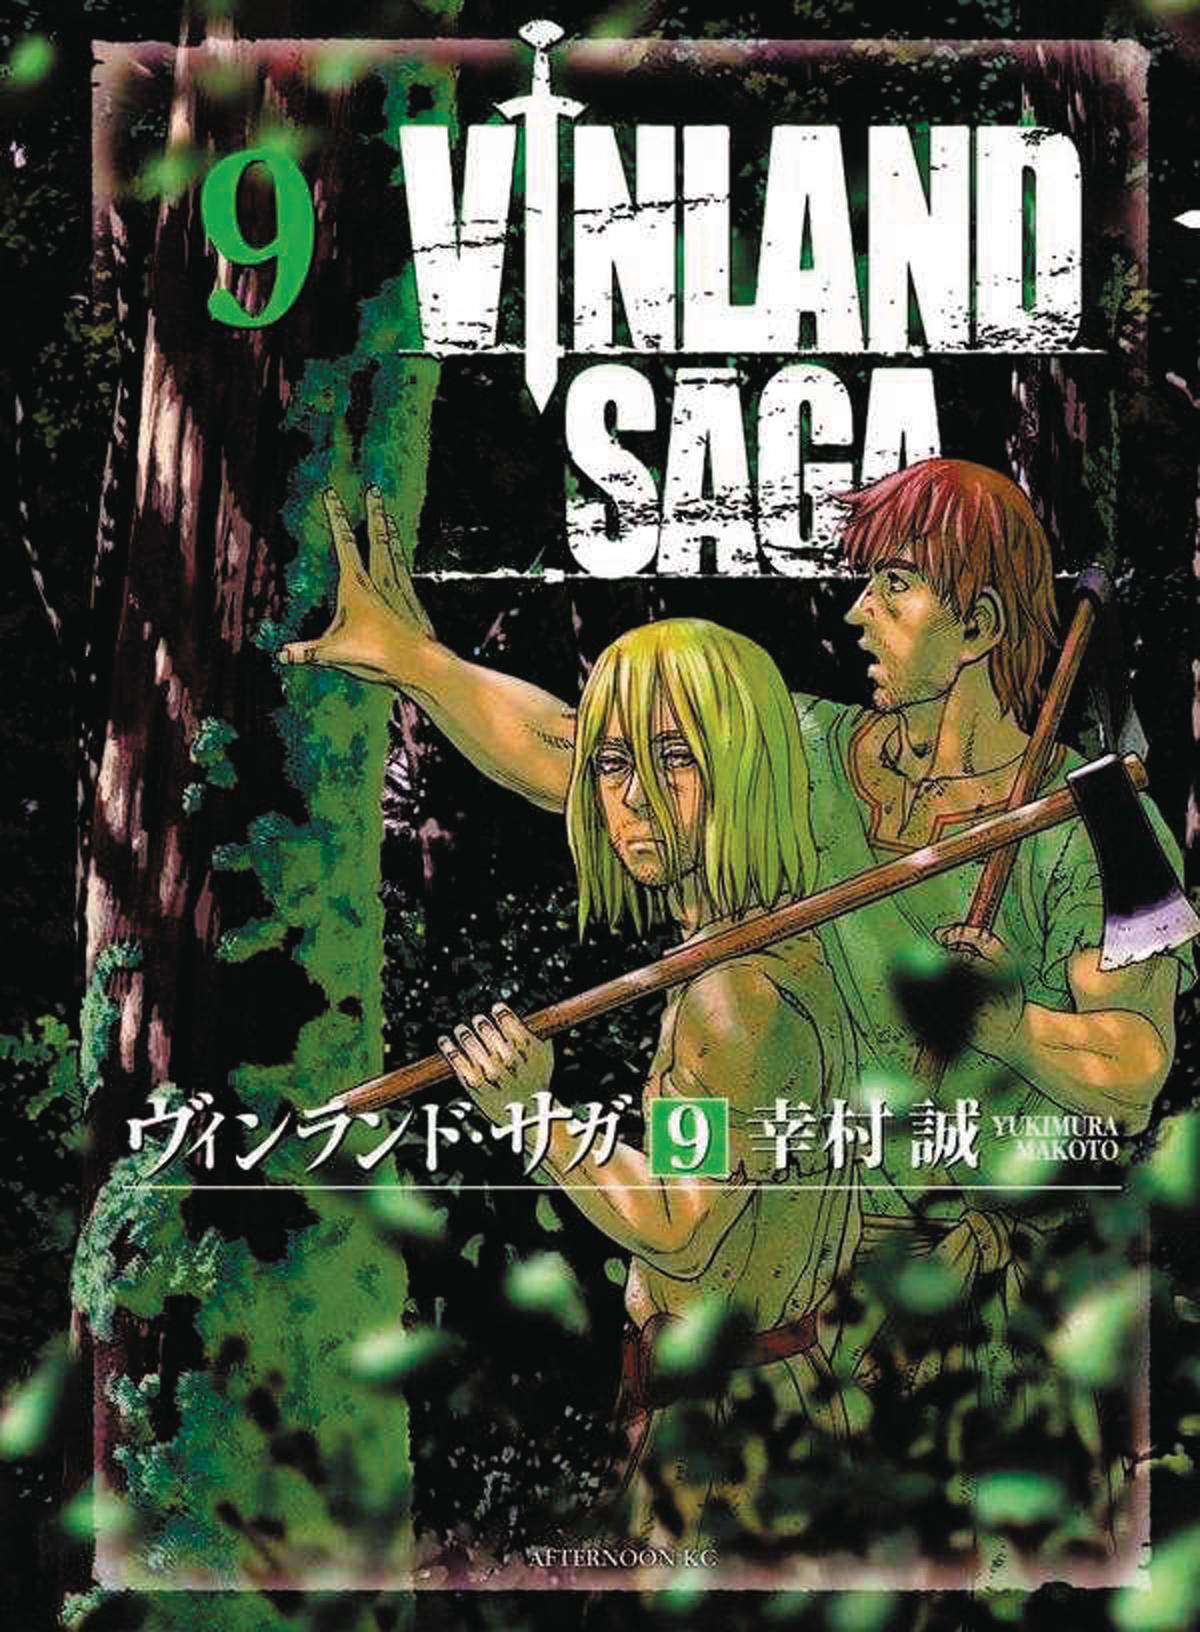 Vinland Saga World